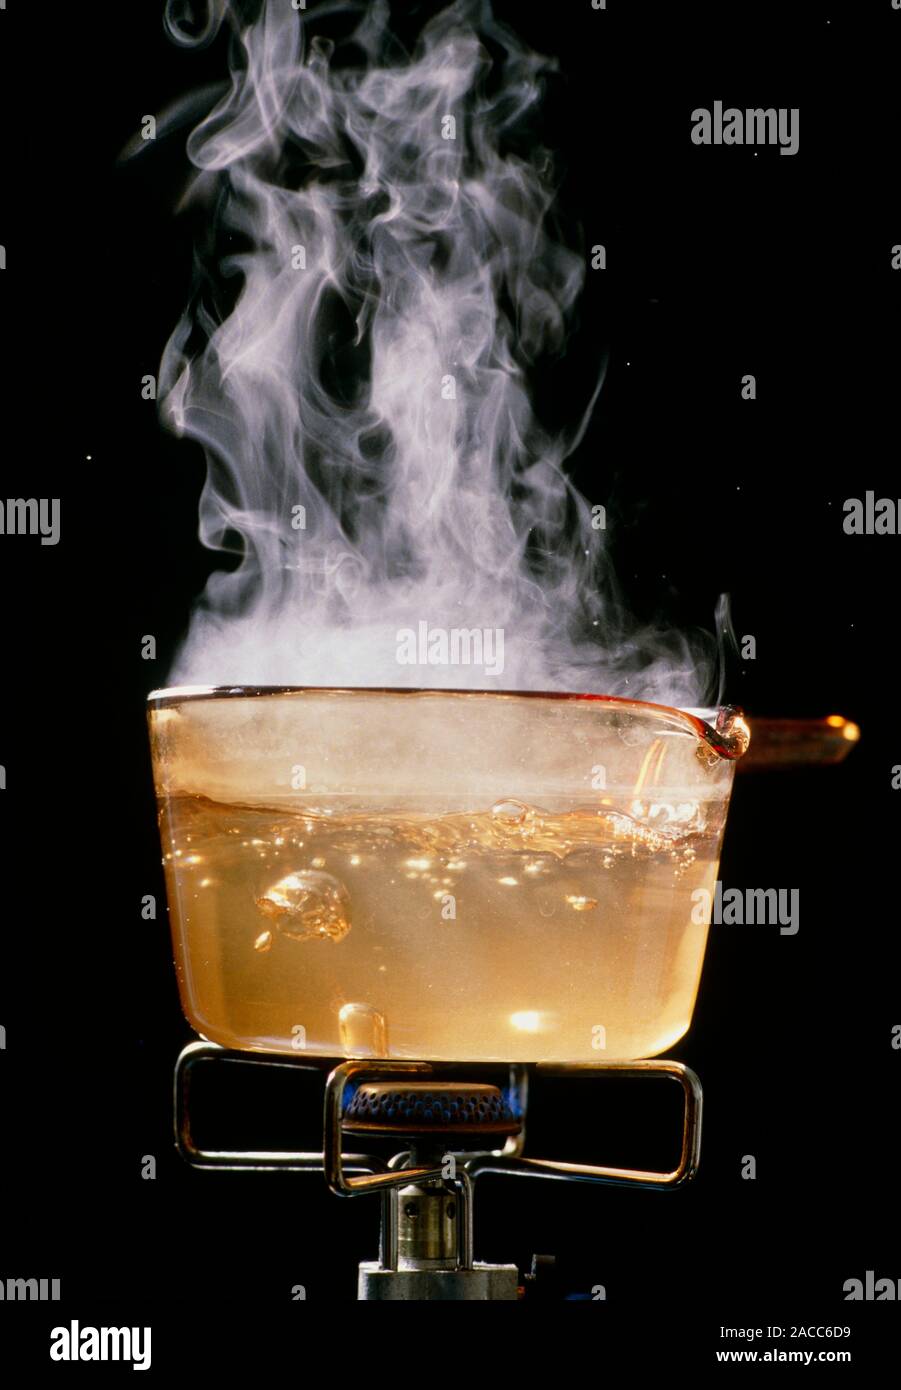 Heat condensation of steam фото 66